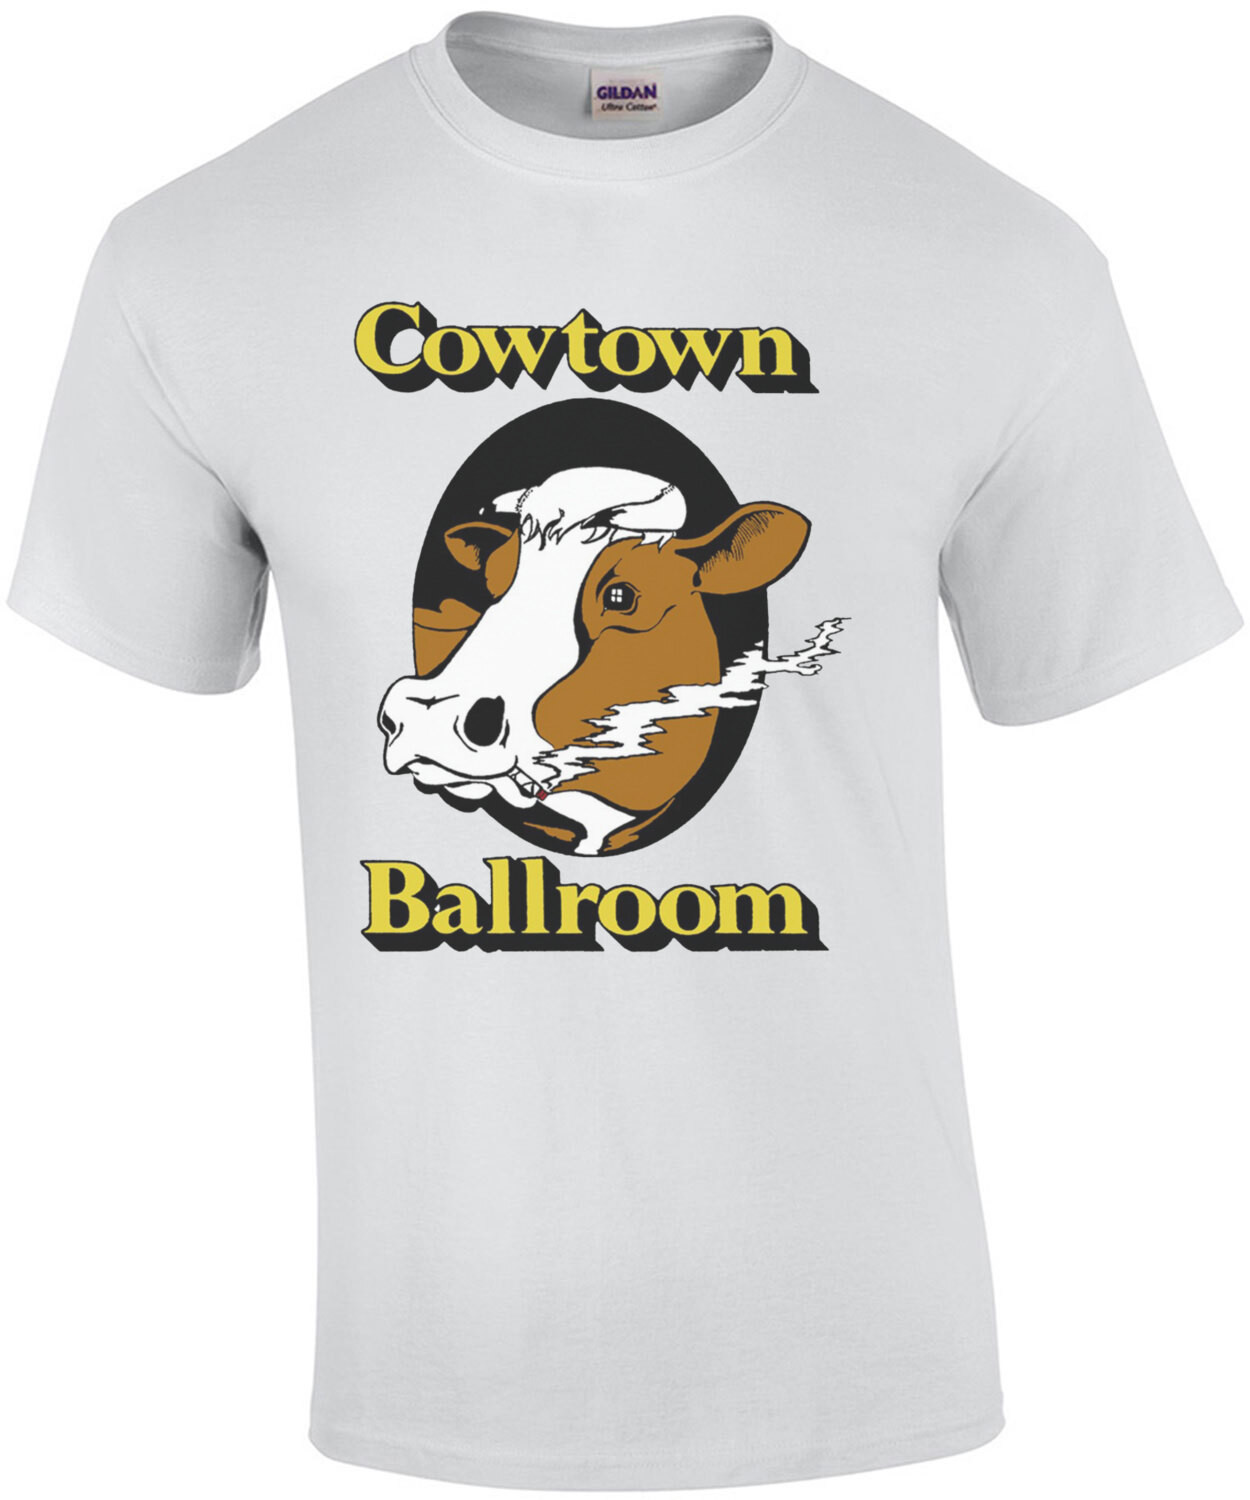 Cowtown Ballroom - funny t-shirt